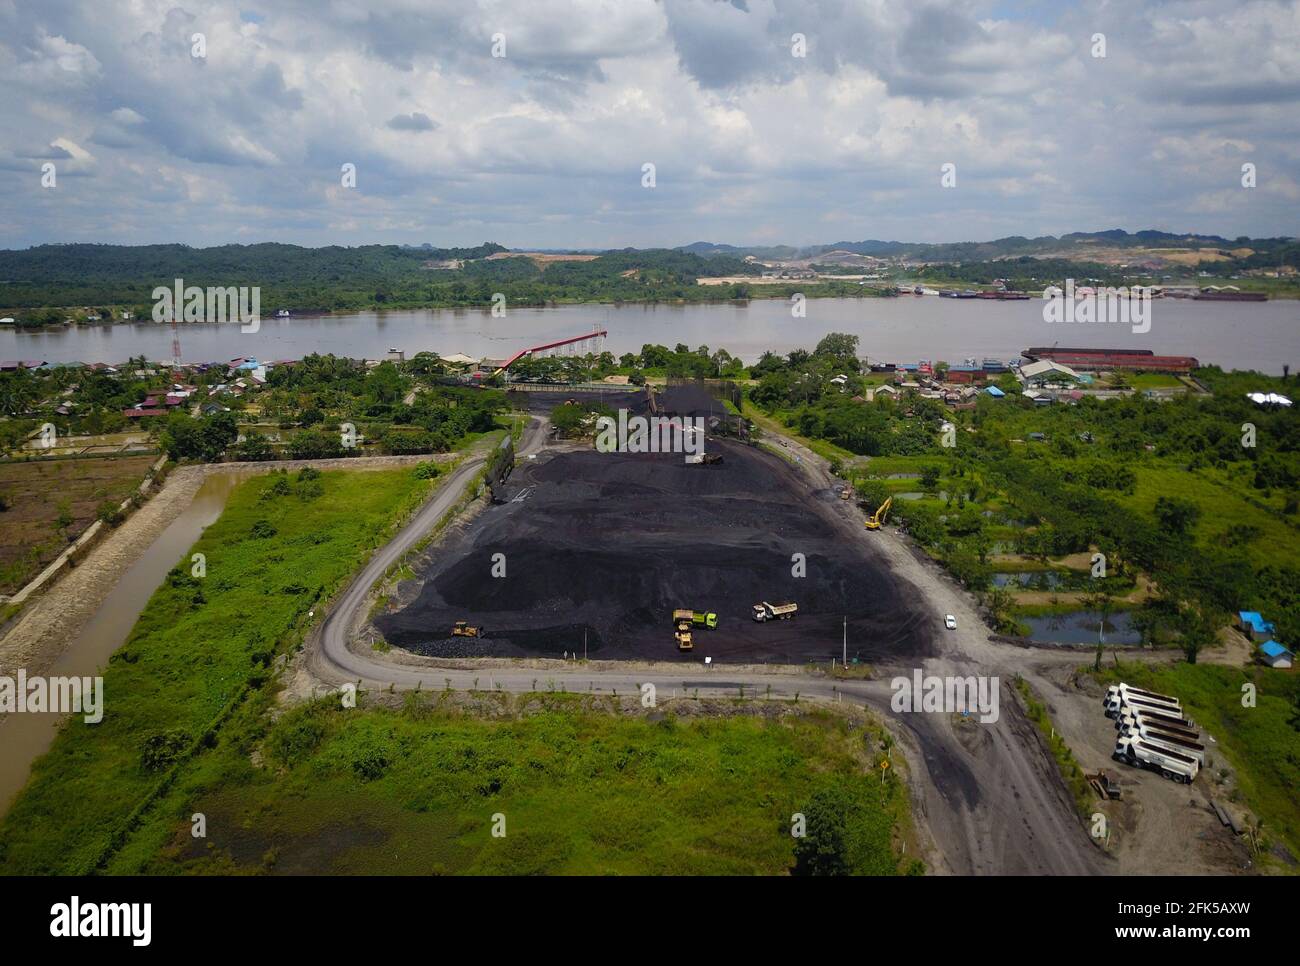 estrazione del carbone, cumulo di scorte, vista aerea Foto Stock